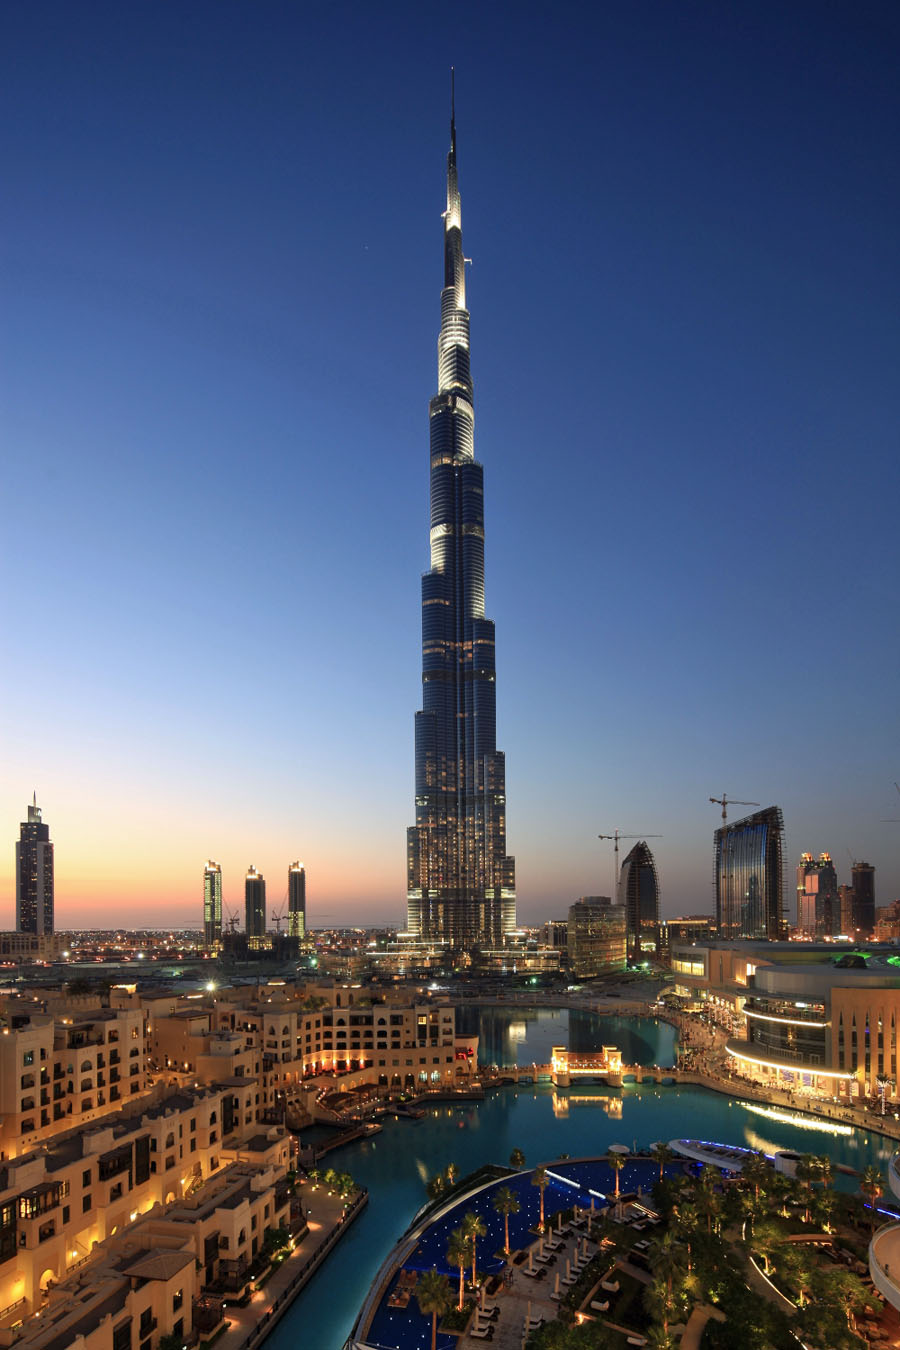 At The top of Burj Khalifa - 124